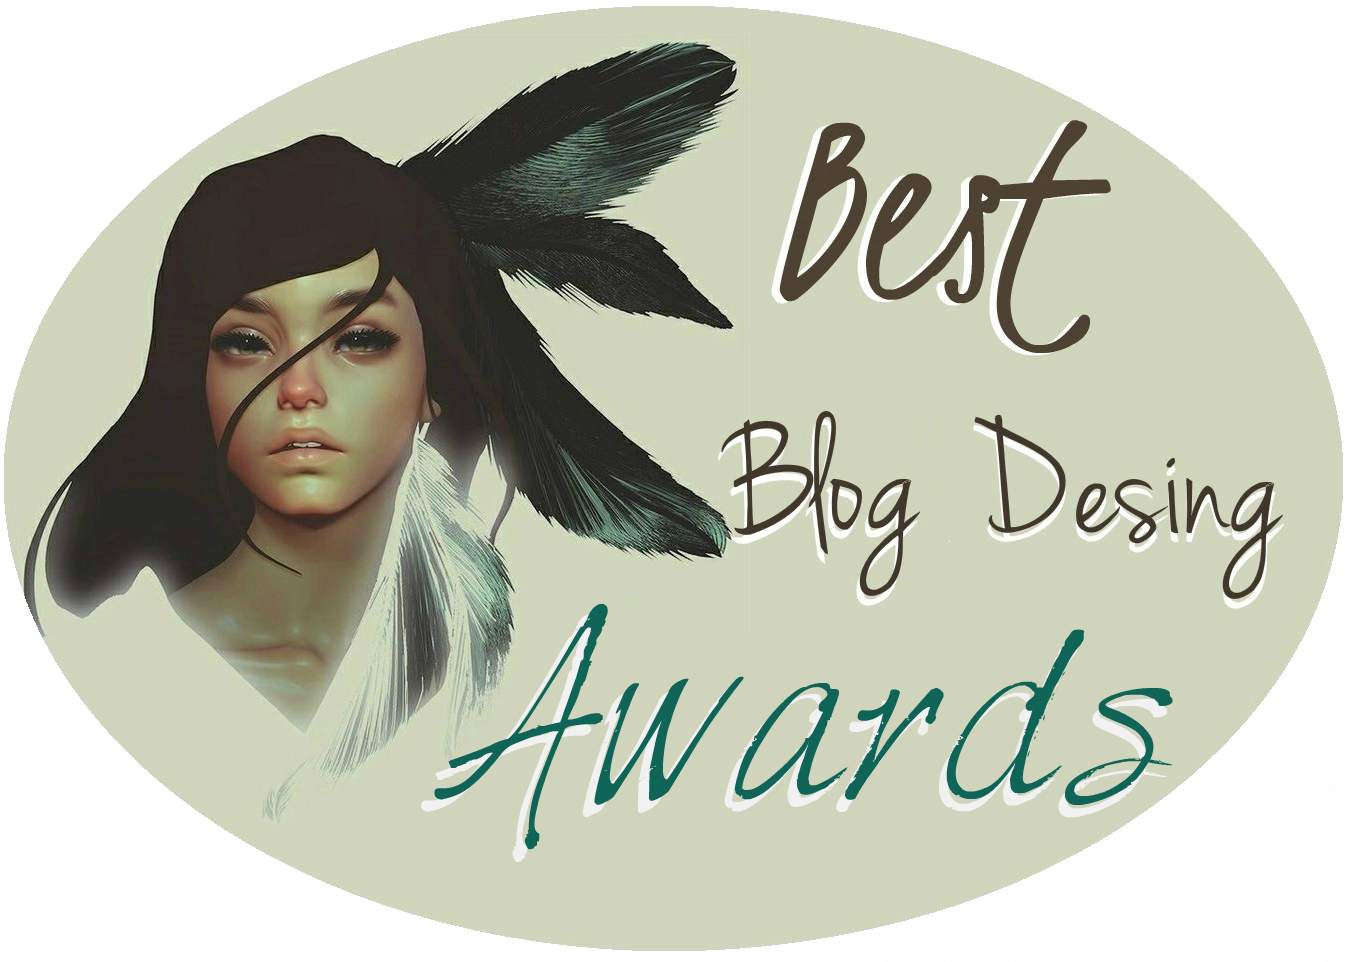 http://lasmalashierbasnuncamueren.blogspot.com.es/2014/06/best-blog-design-awards.html?showComment=1402644356890#c5096507347279465312